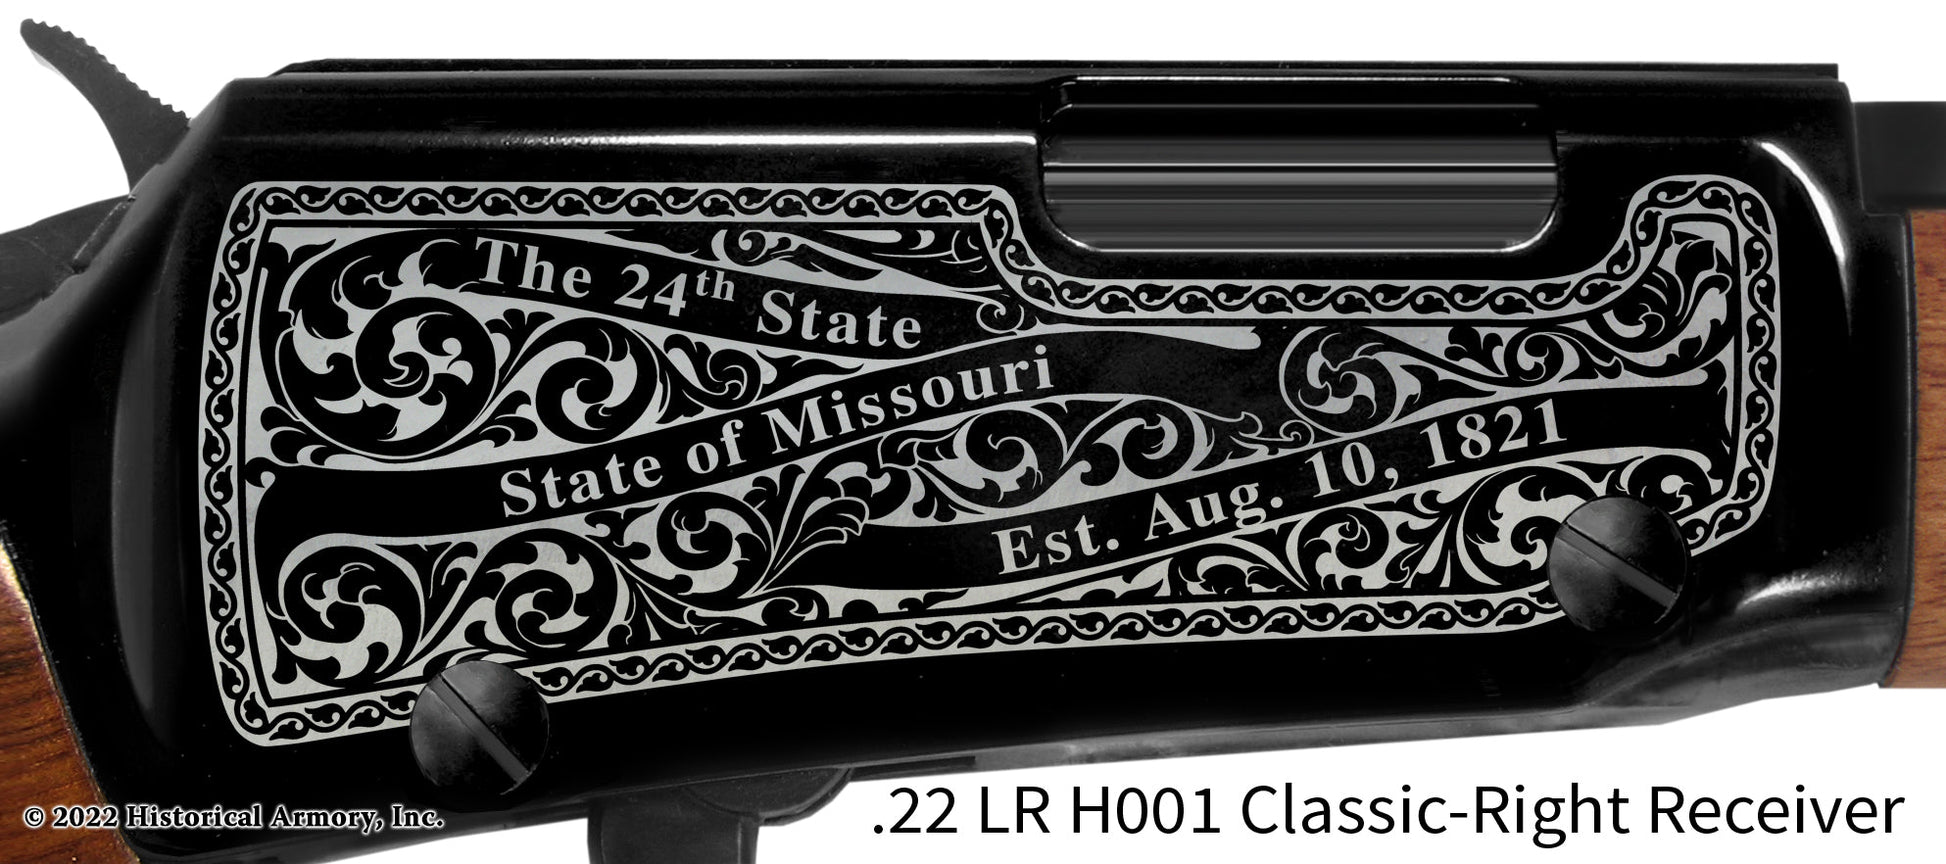 Linn County Missouri Engraved Henry H001 Rifle